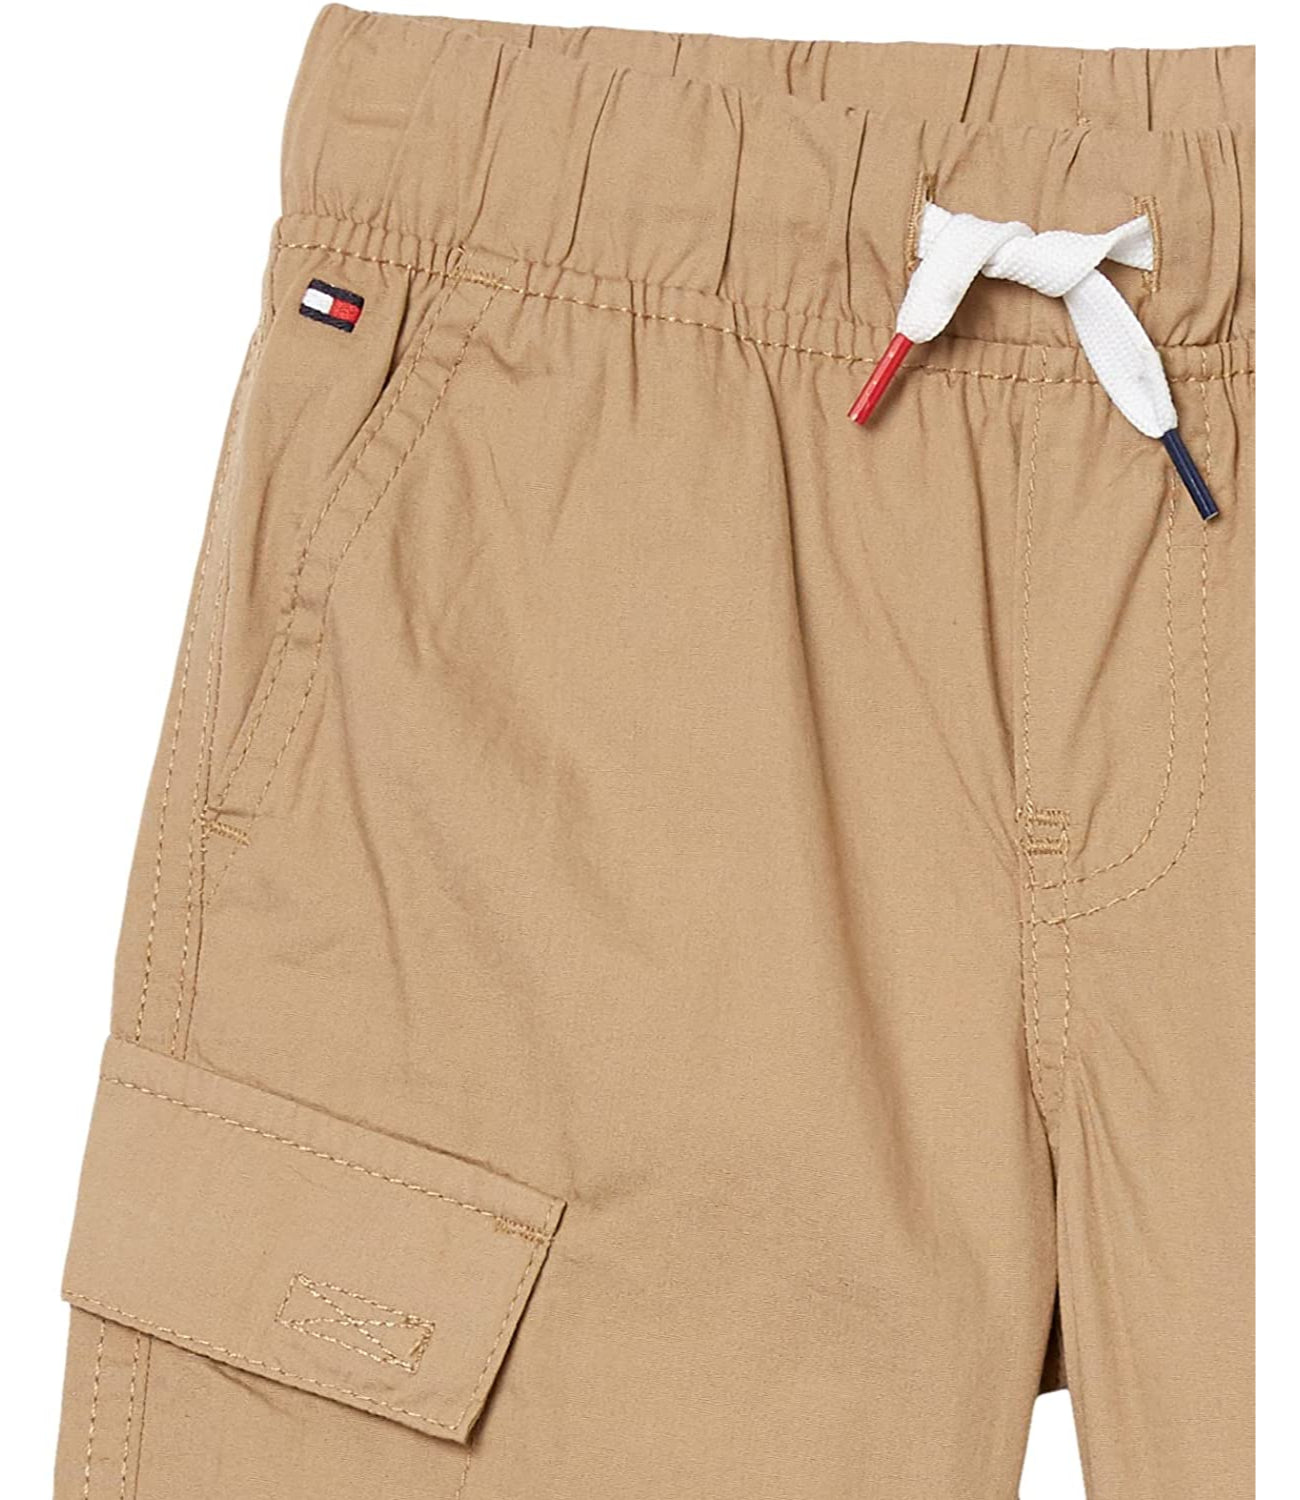 Tommy Hilfiger Boys 4-7 Cargo Woven Shorts